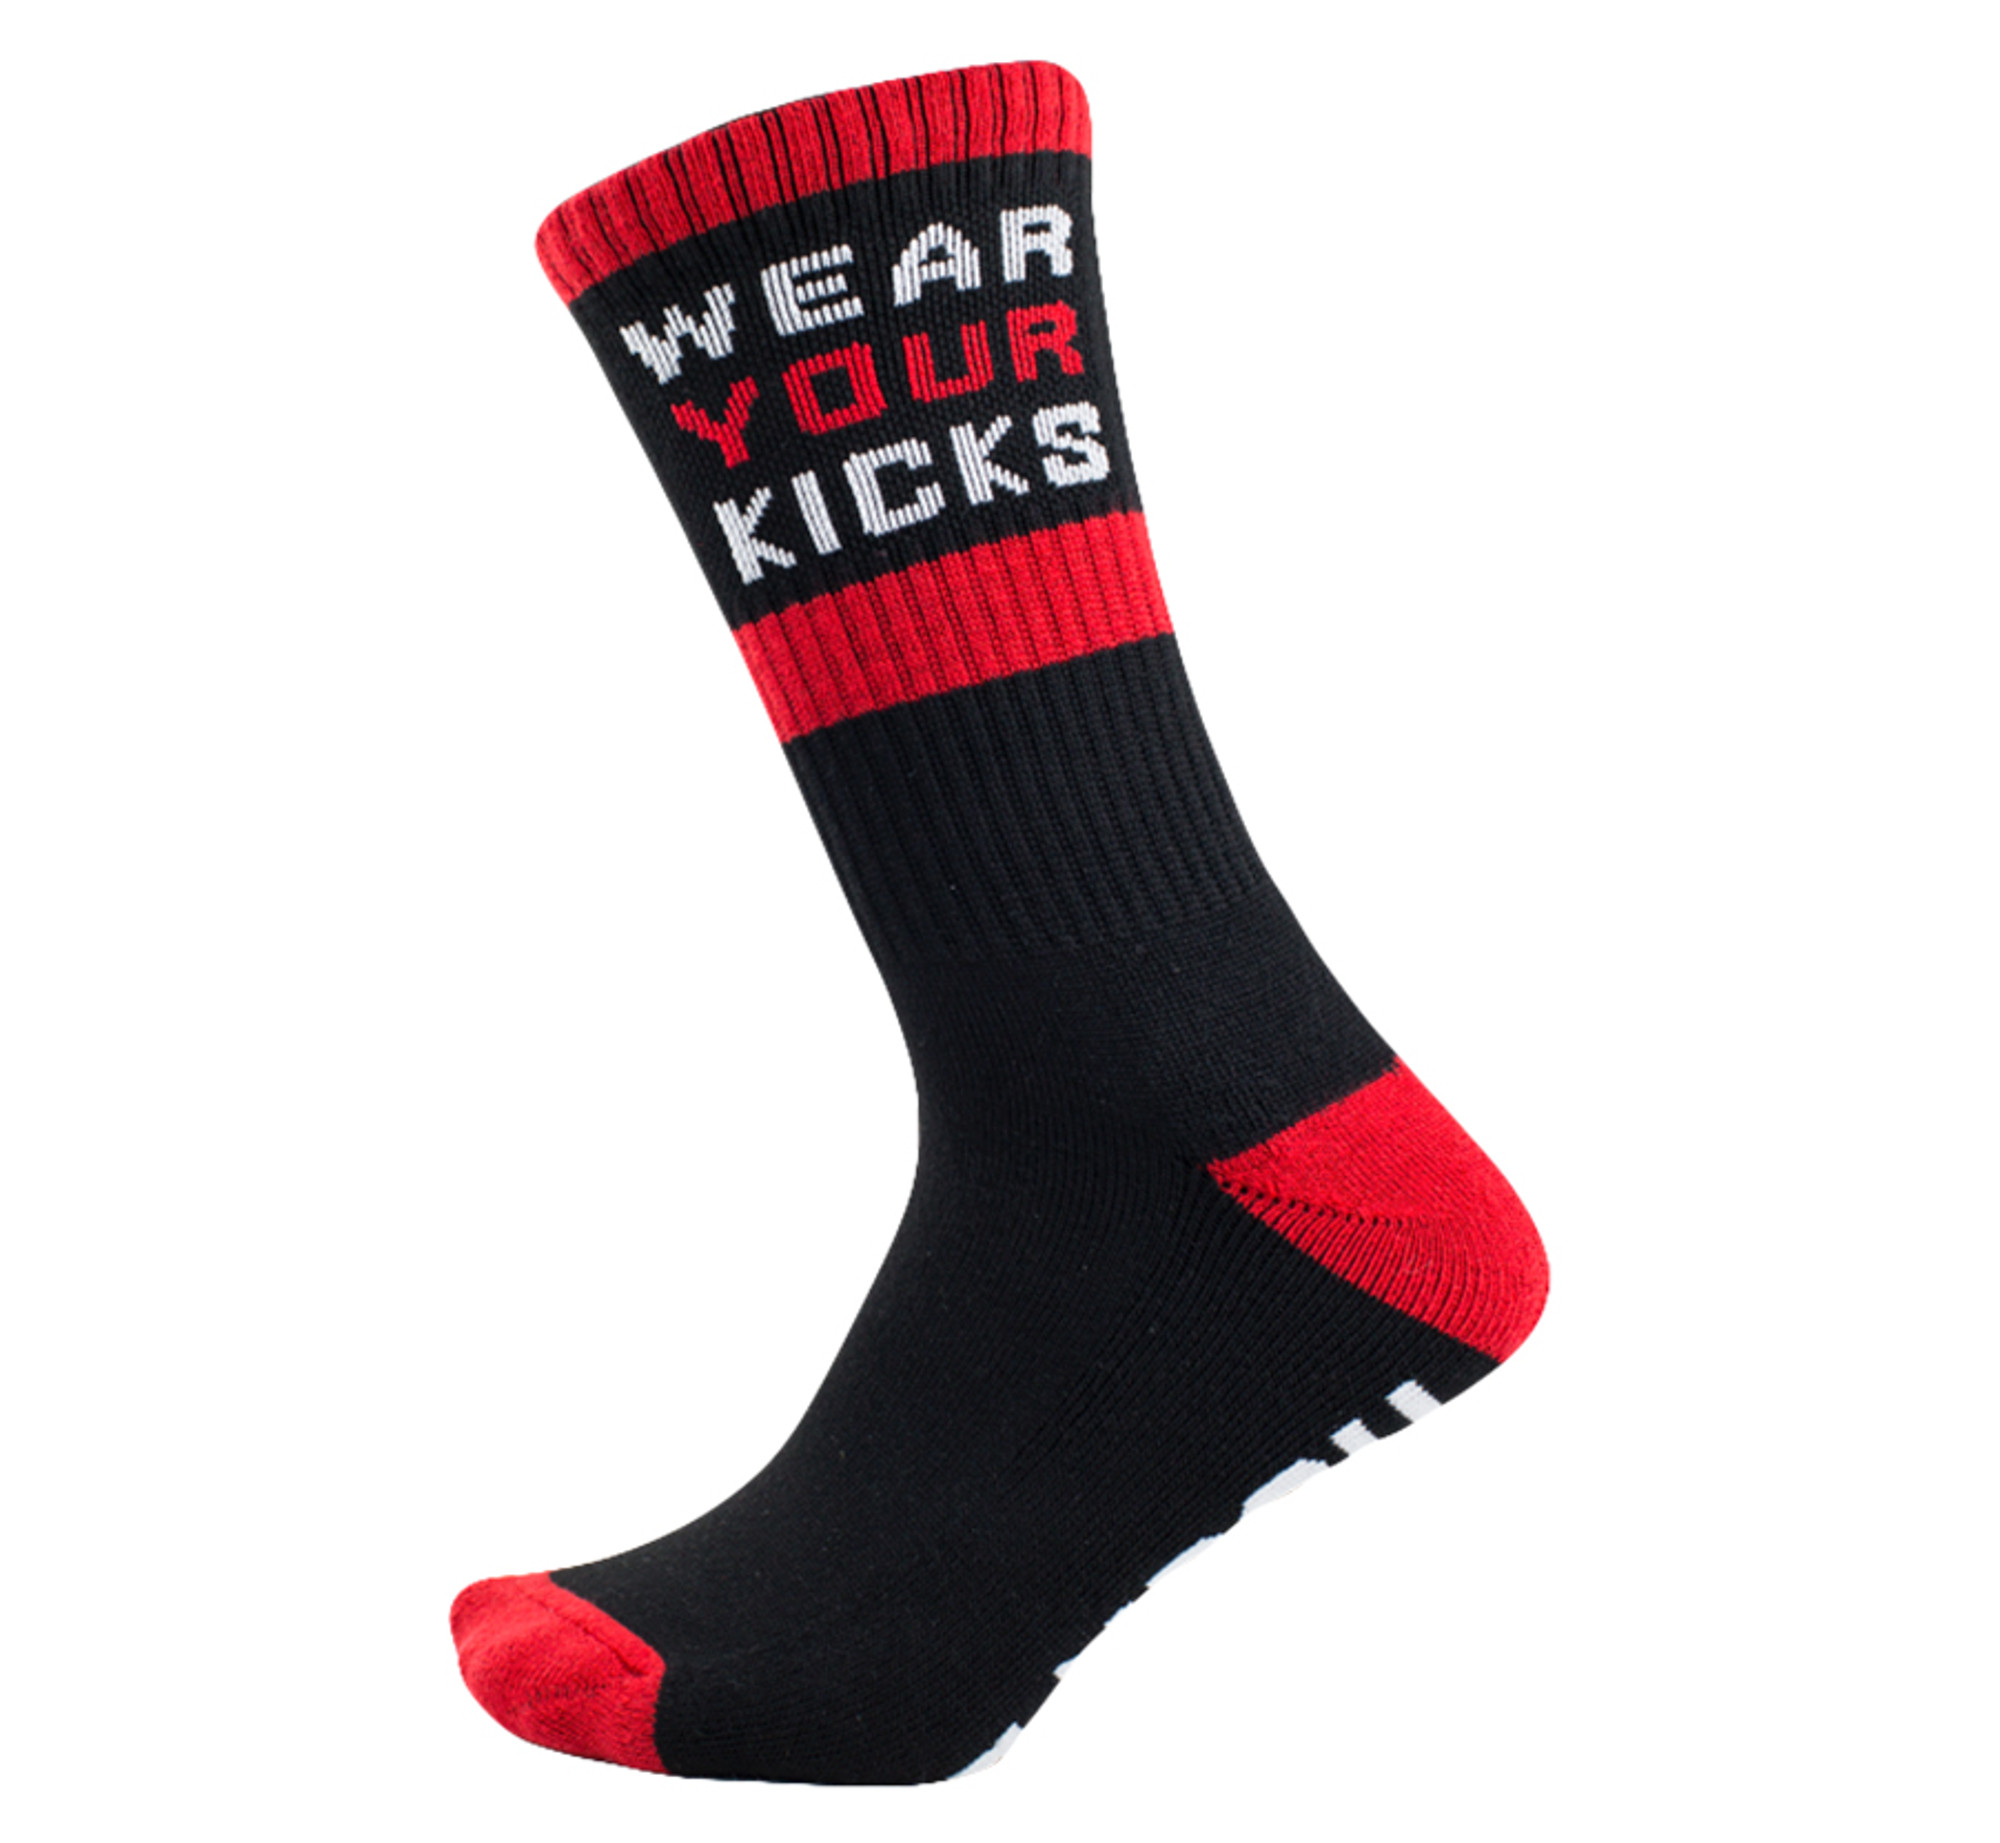 Wear Your Kicks - Black/Red - Sunlight Station